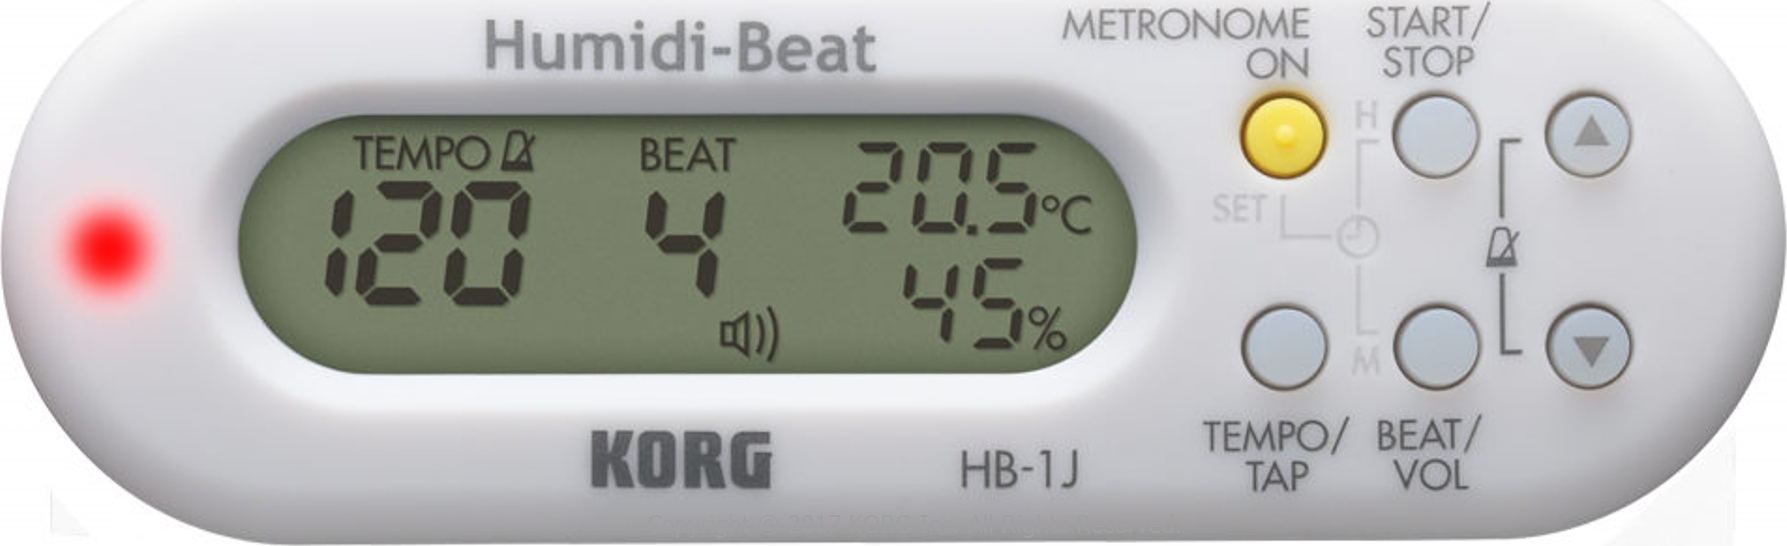 Korg Humidi-beat Metronome With Humidity Temperature Detector White - Stimmgerät für Gitarre - Main picture